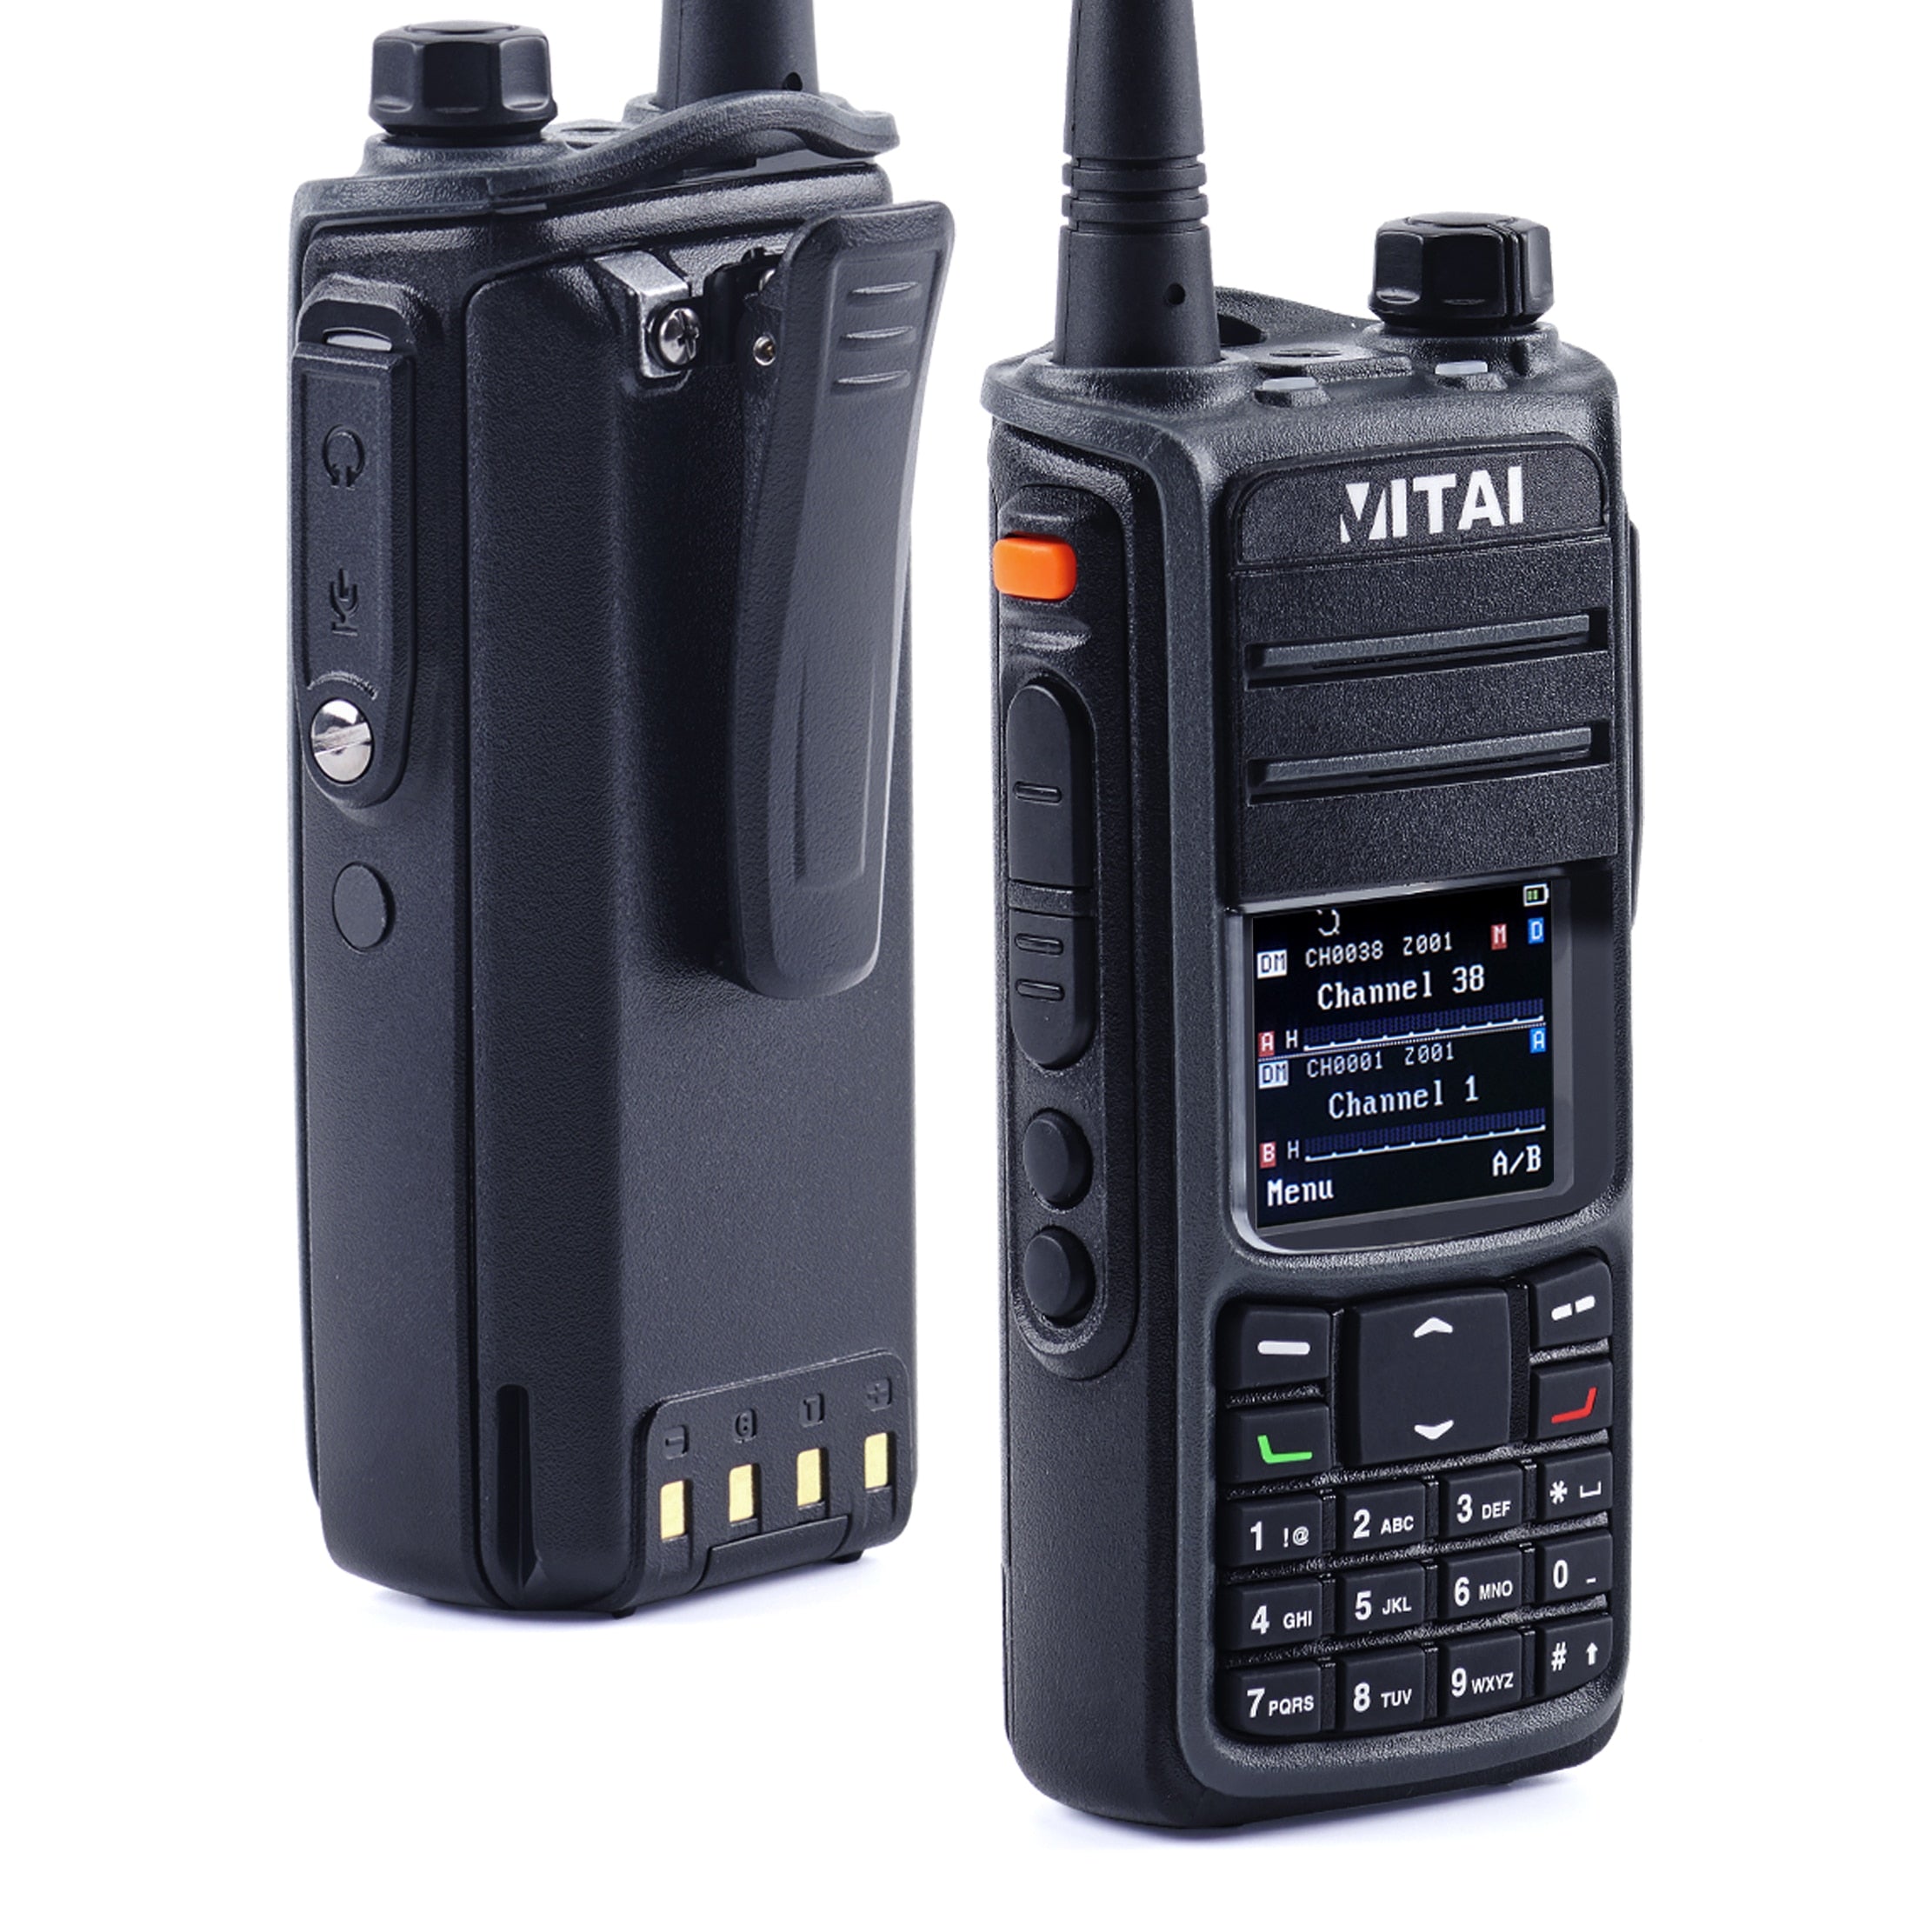 VITAI VDG-UV008 Two Way Radio Dual Band DMR Digital Radio With AES256 Encryption 10W Power Waterproof IP67 Walkie-talkie GPS